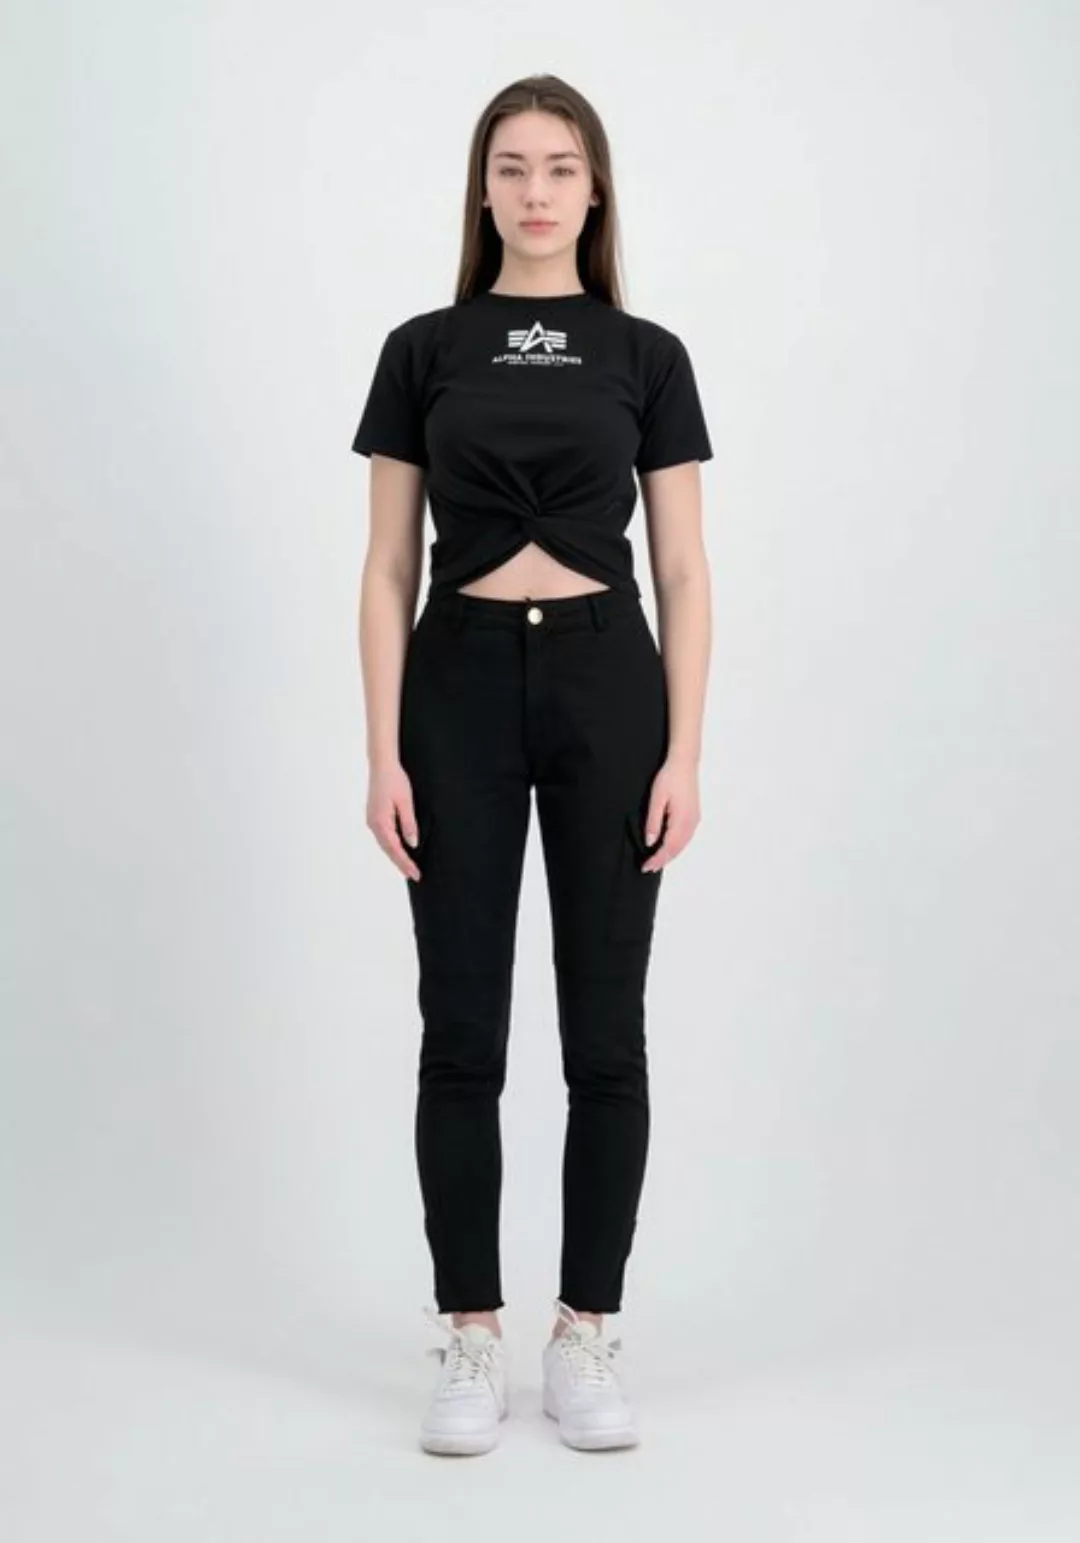 Alpha Industries Muscleshirt "ALPHA INDUSTRIES Women - T-Shirts Knotted Cro günstig online kaufen